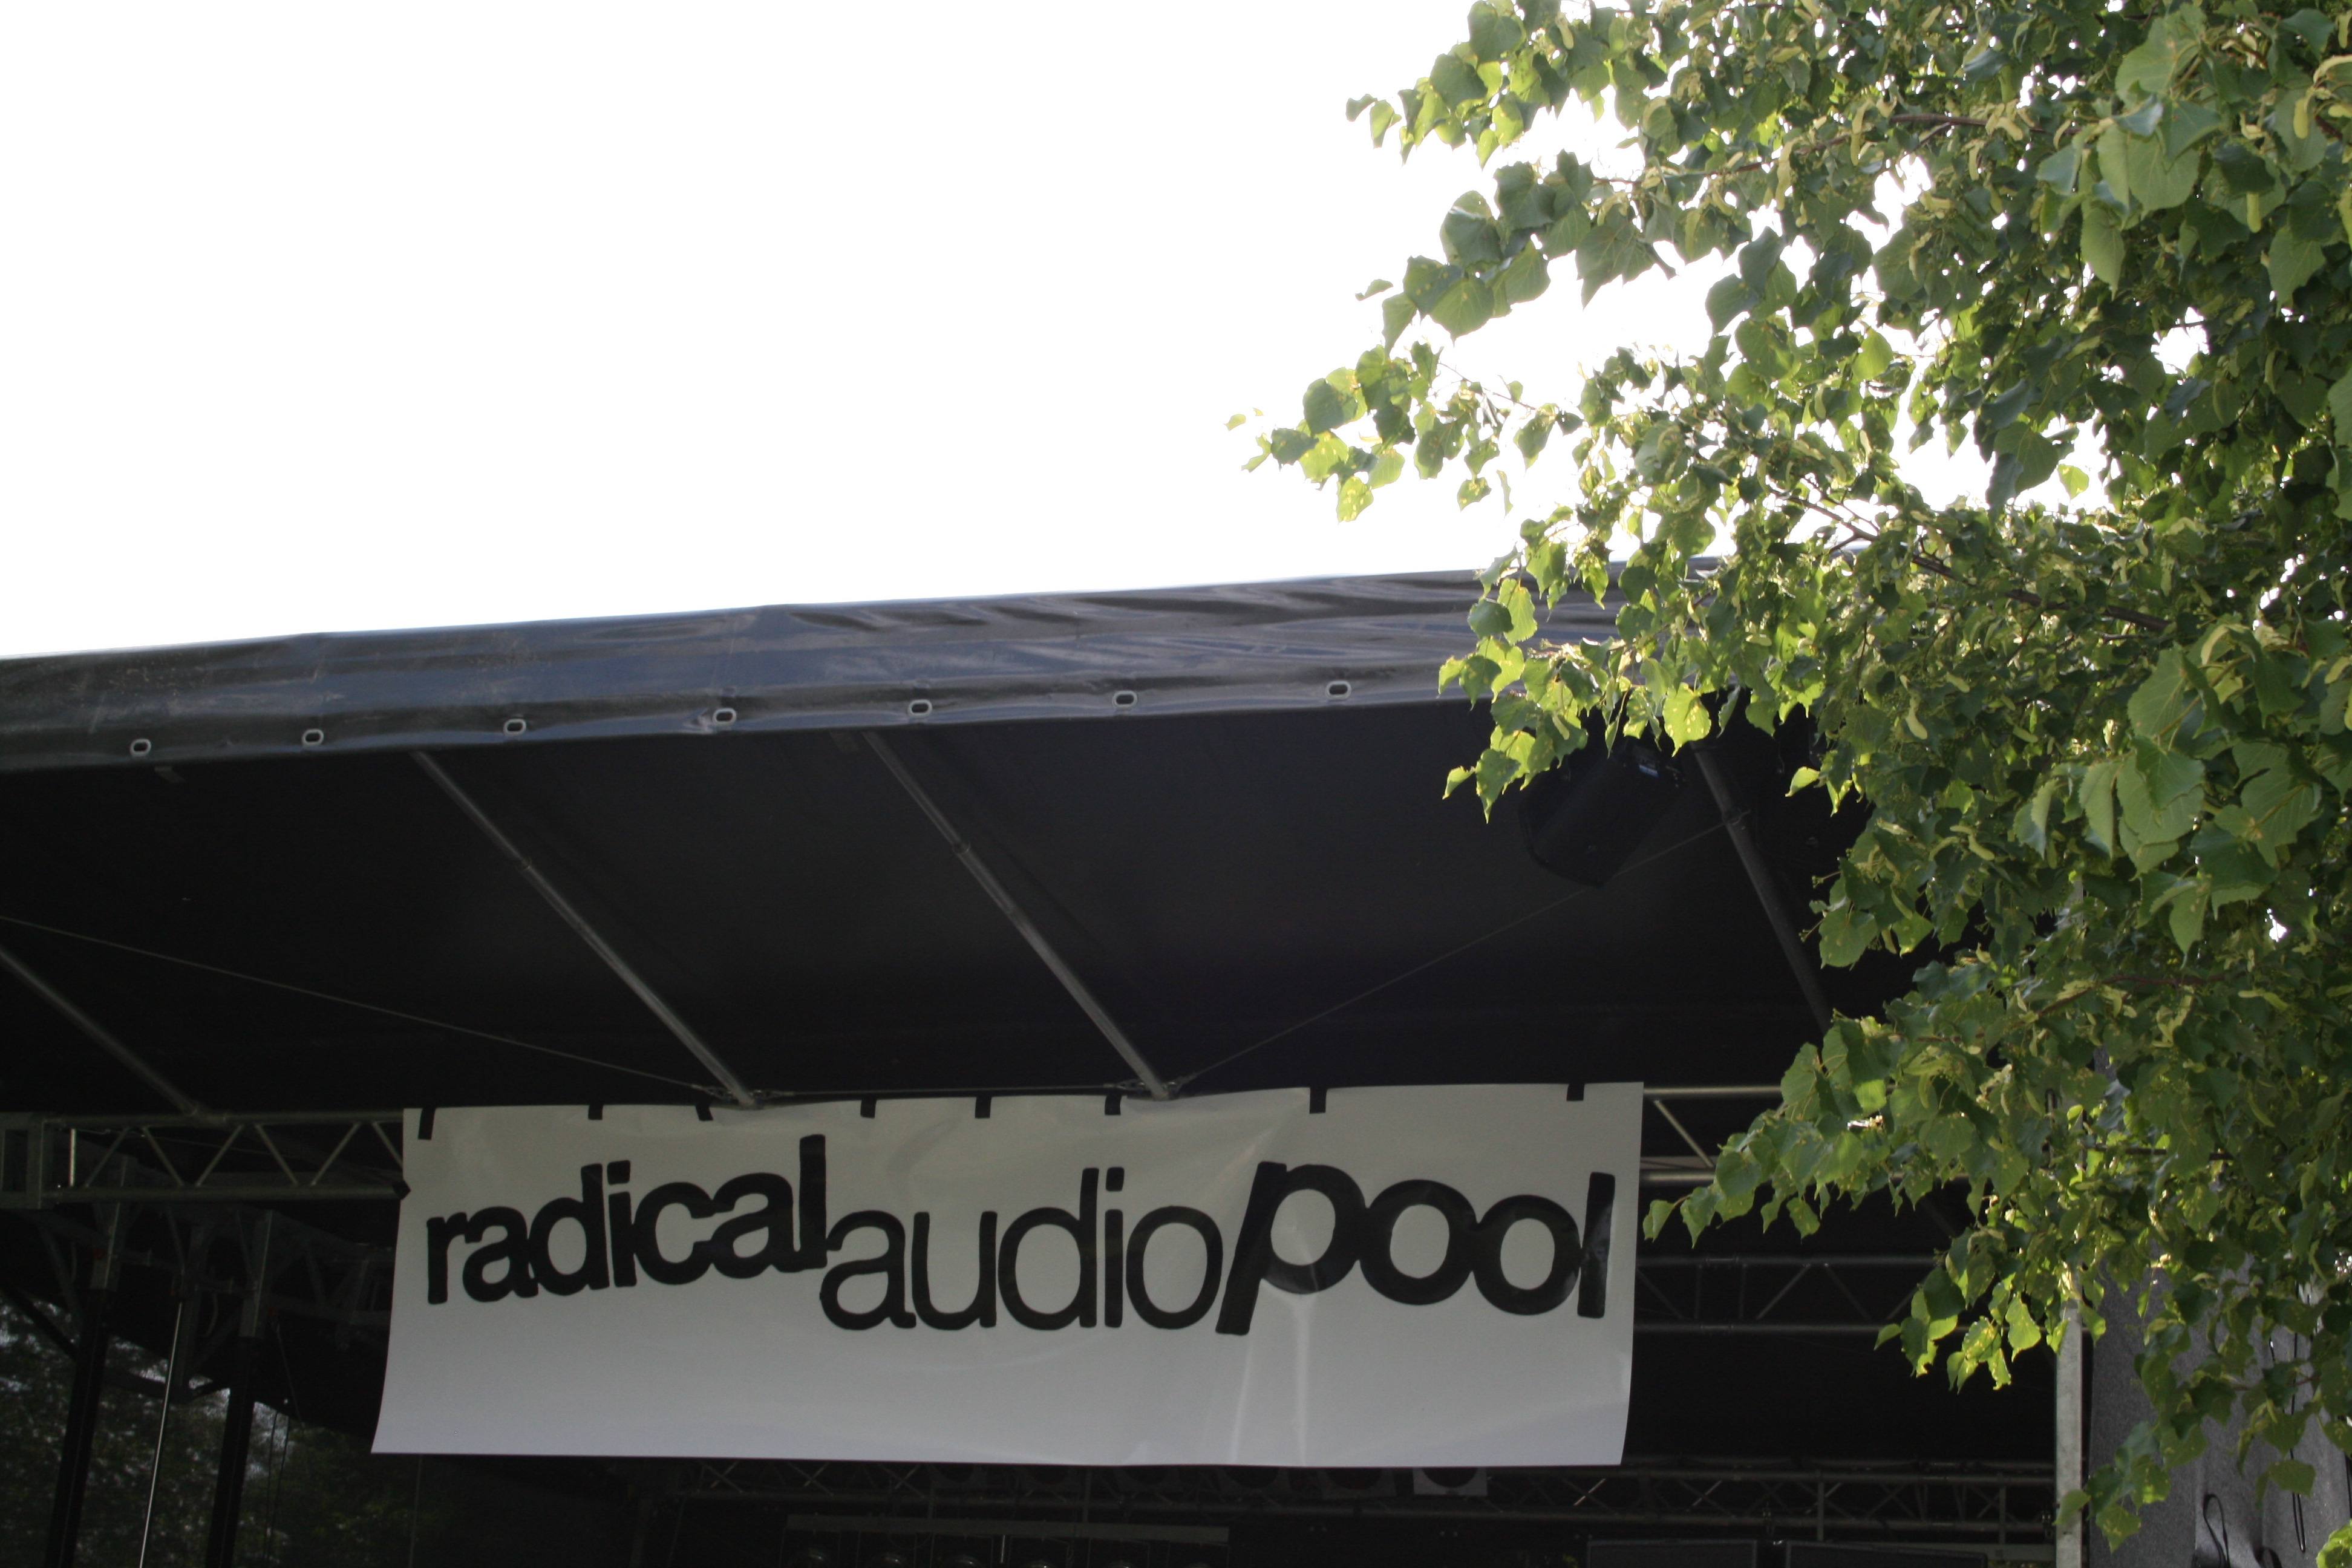 Radical Audio Pool-Bühne beim AStA-Sommerfestival 2009